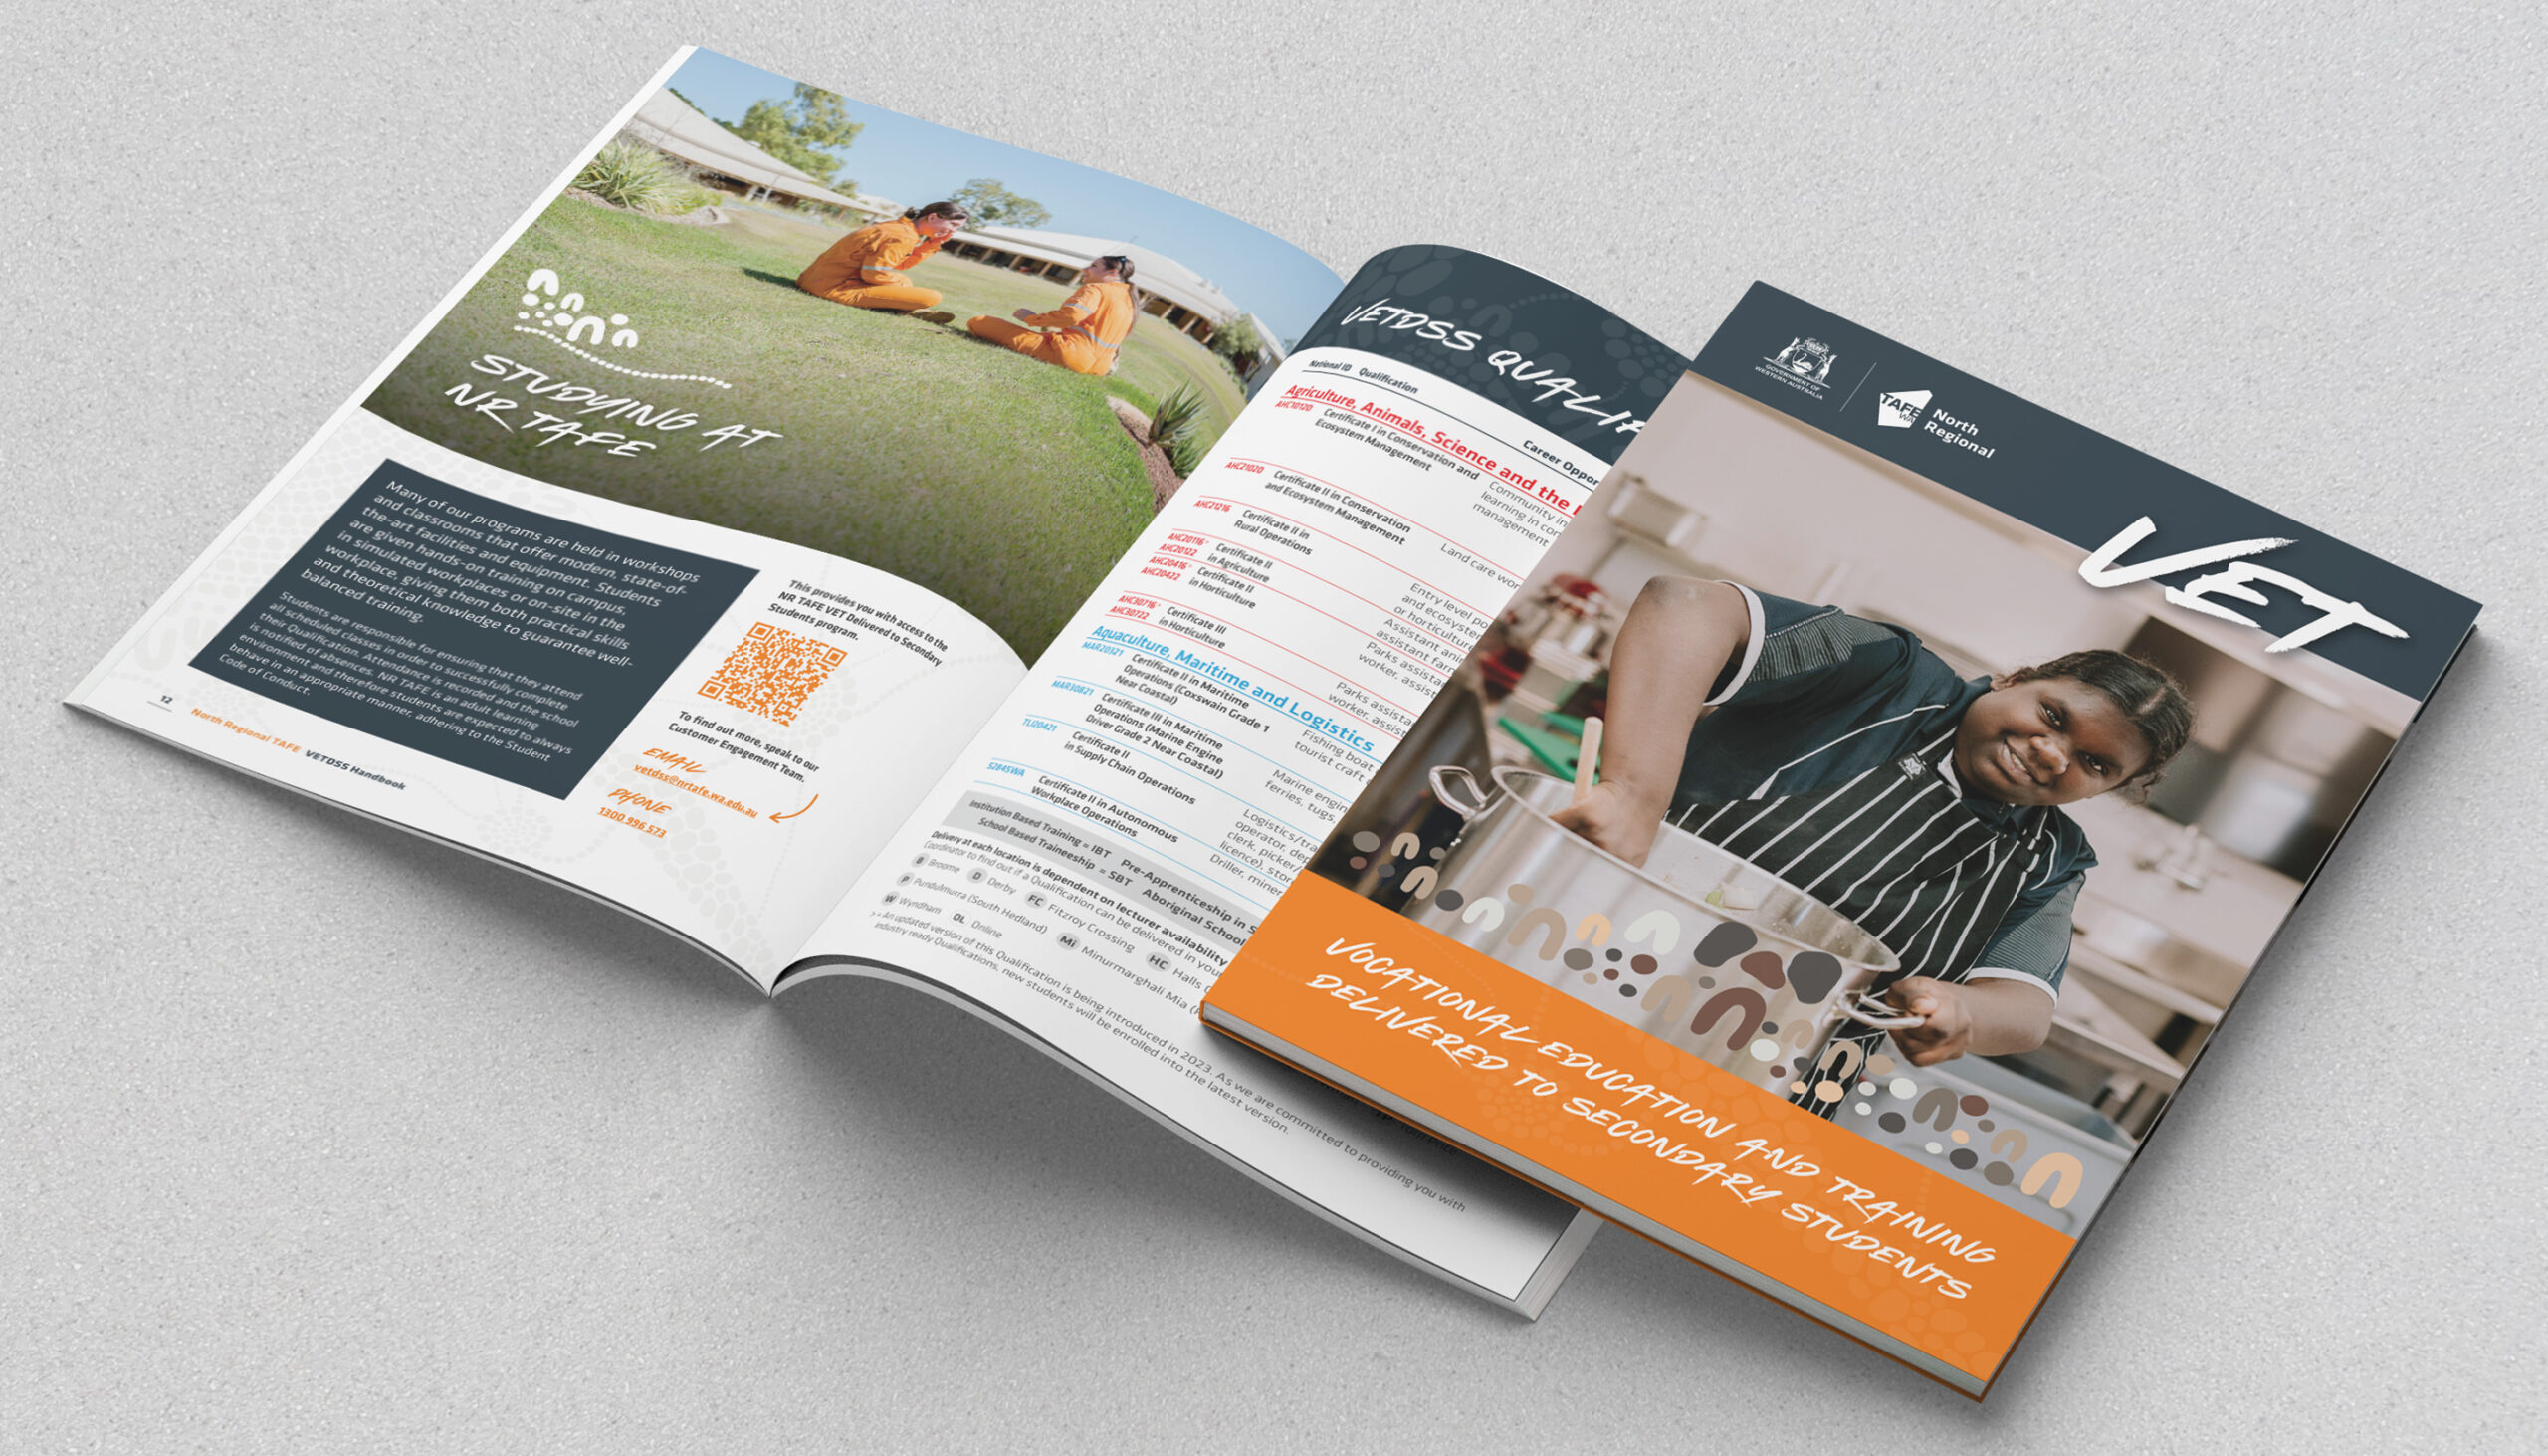 Campaign Branding, Brochures and Course Guide & Banner Design for North Regional Tafe by TL Design Co. Designer Taryn Langlois